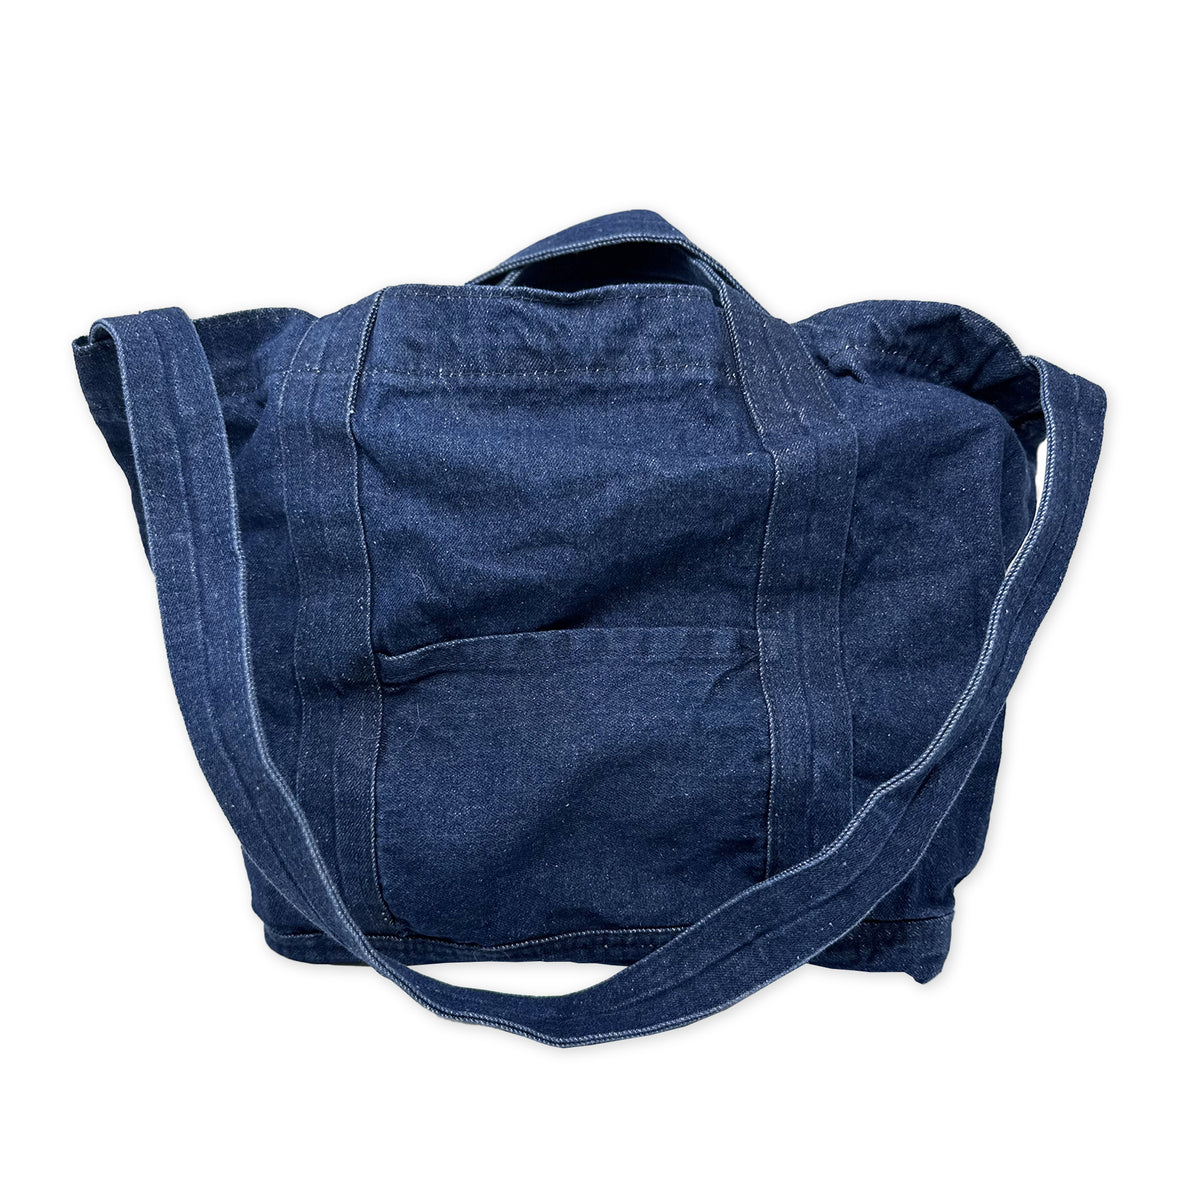 LEI Denim Blue Jean Crossbody Bag SMALL L.E.I. Cross Body Purse